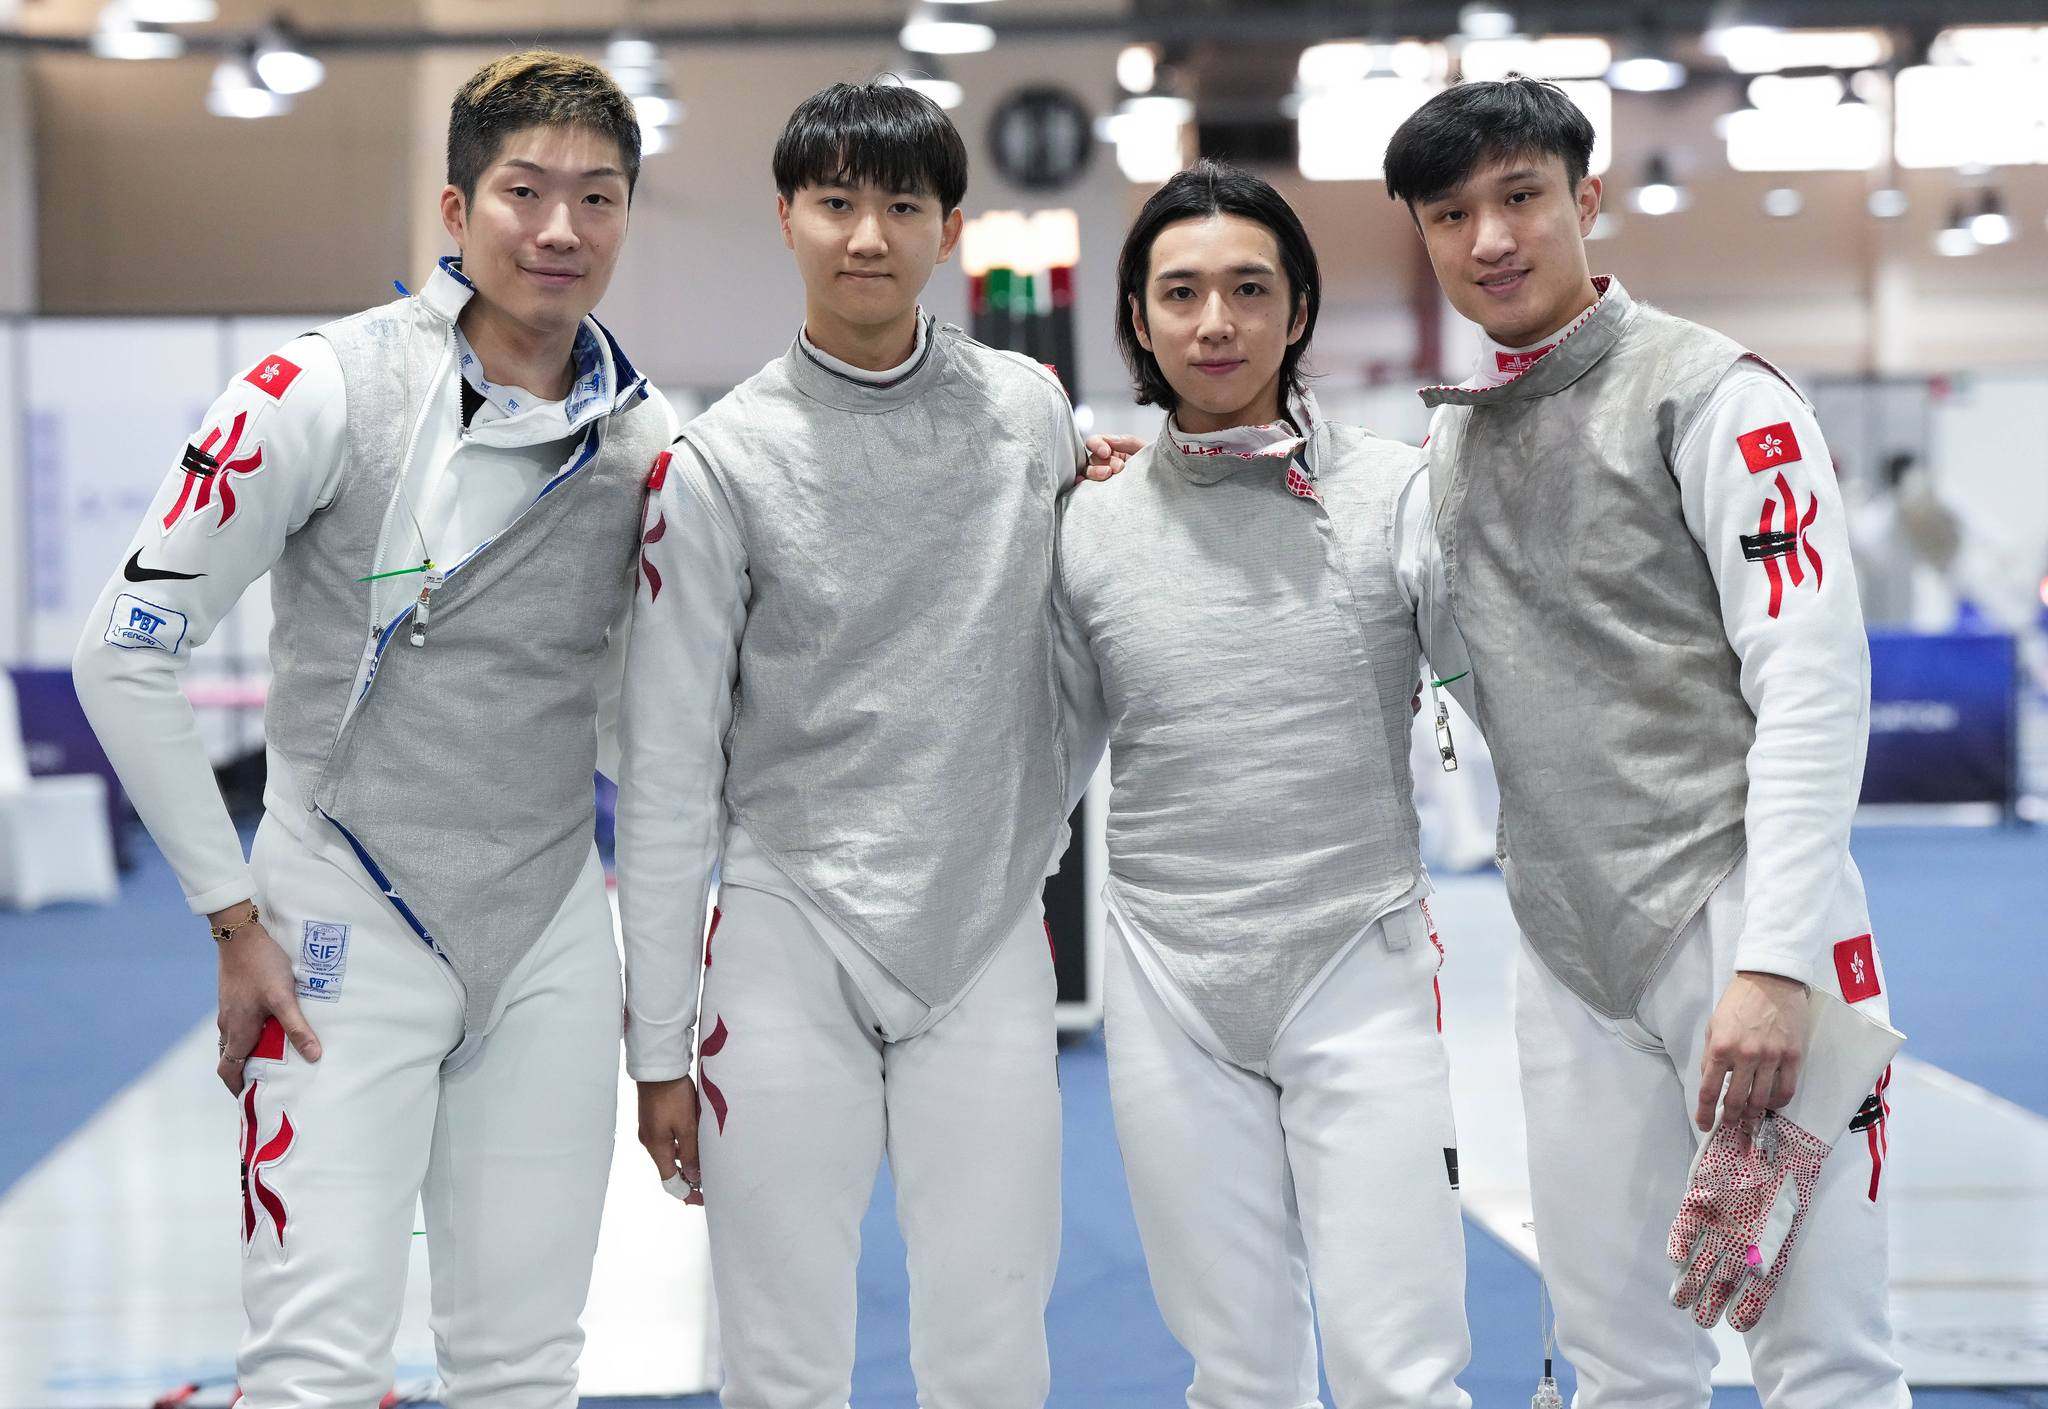 Hong Kong fencers (from left) Cheung Ka-long, Leung Chin-yu, Nicholas Choi and Ryan Choi. Photo: FIE